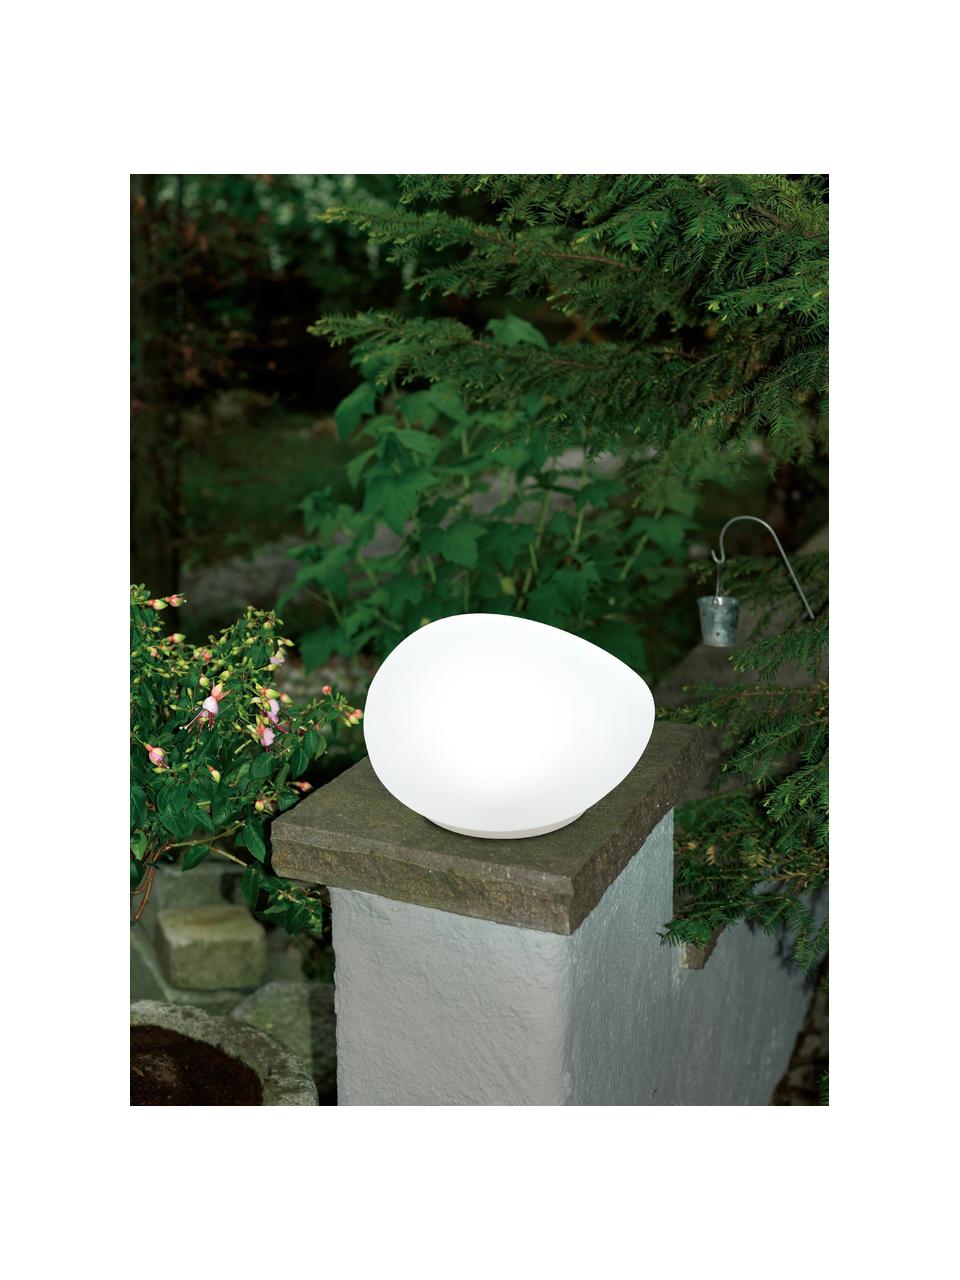 Petite lampe solaire LED Pebble, Blanc, larg. 14 x haut. 10 cm